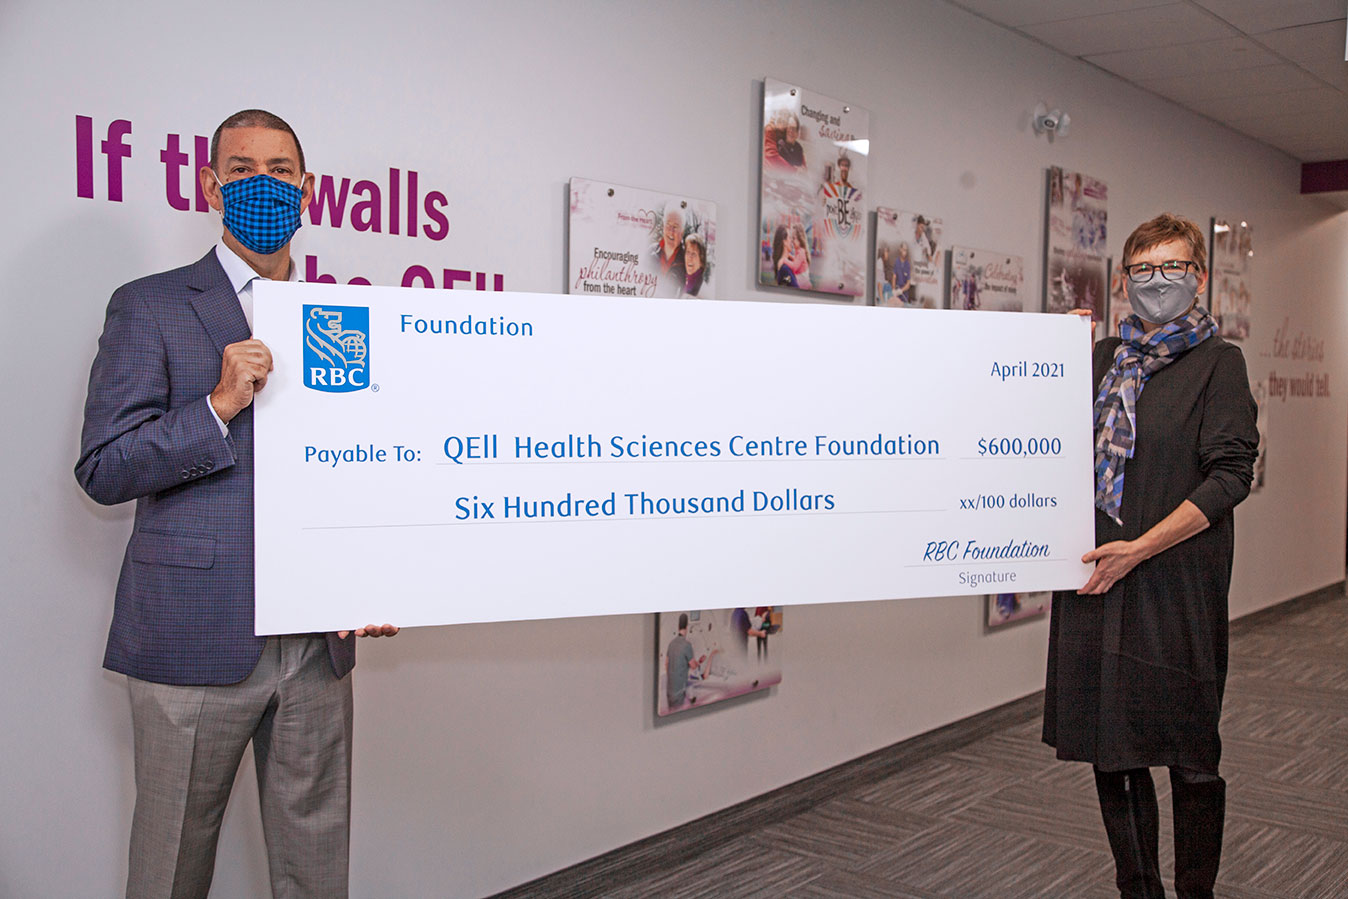 RBC Foundation rep hands over a cheque to QEII Foundation